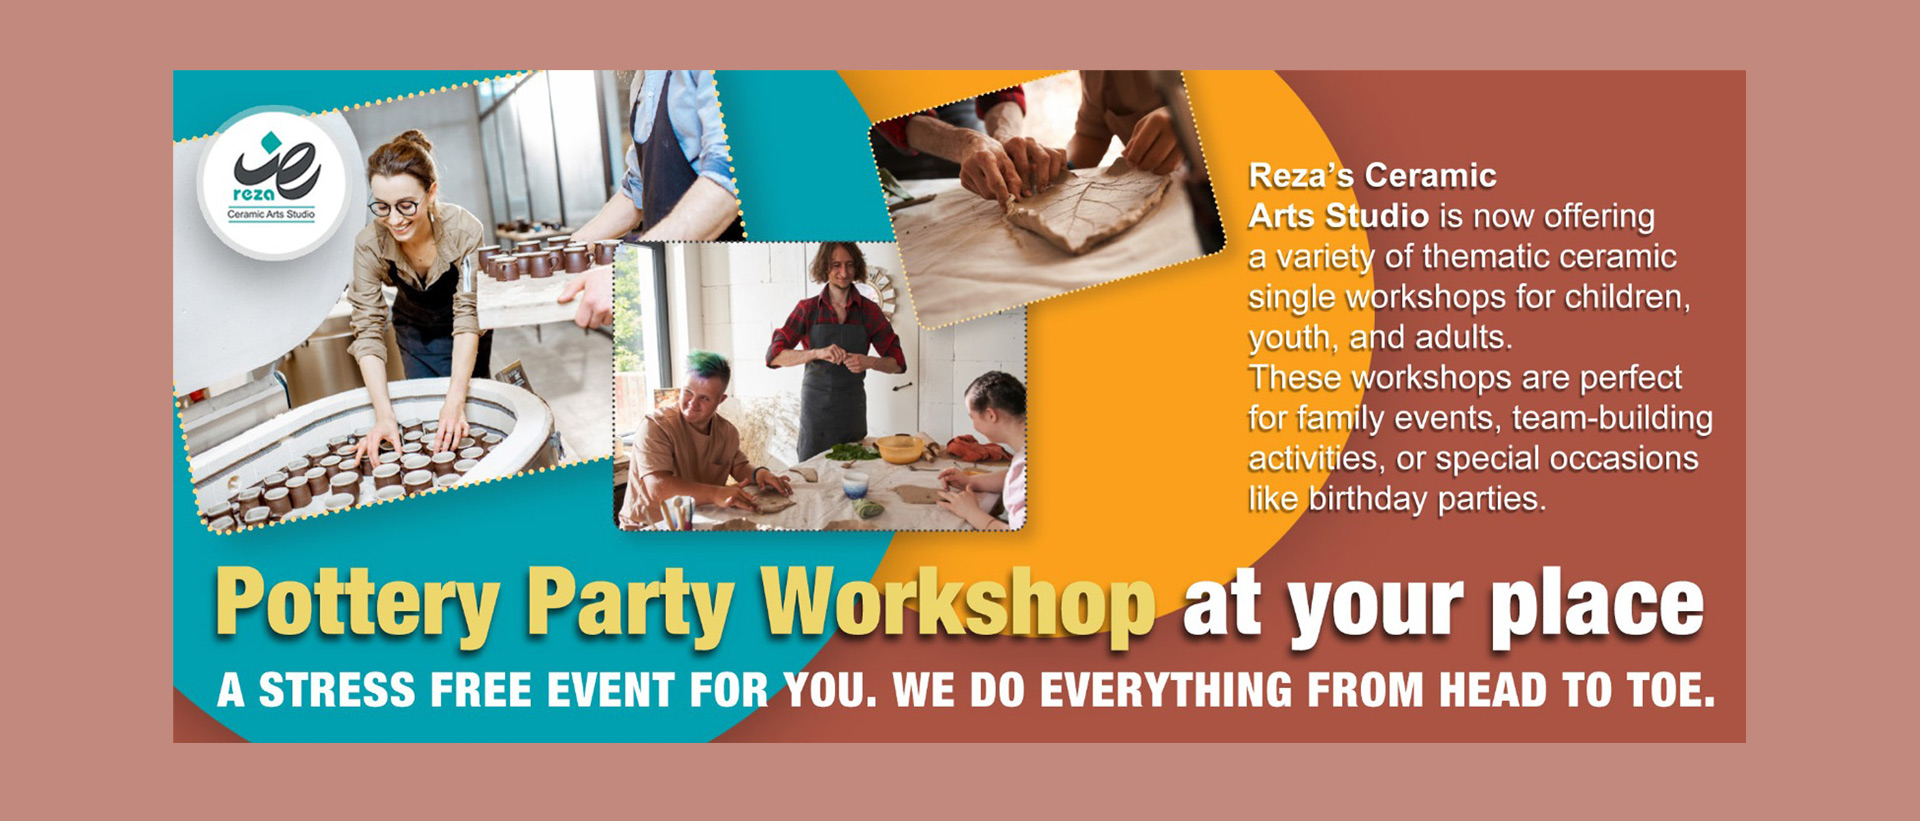 Pottery Party Workshop